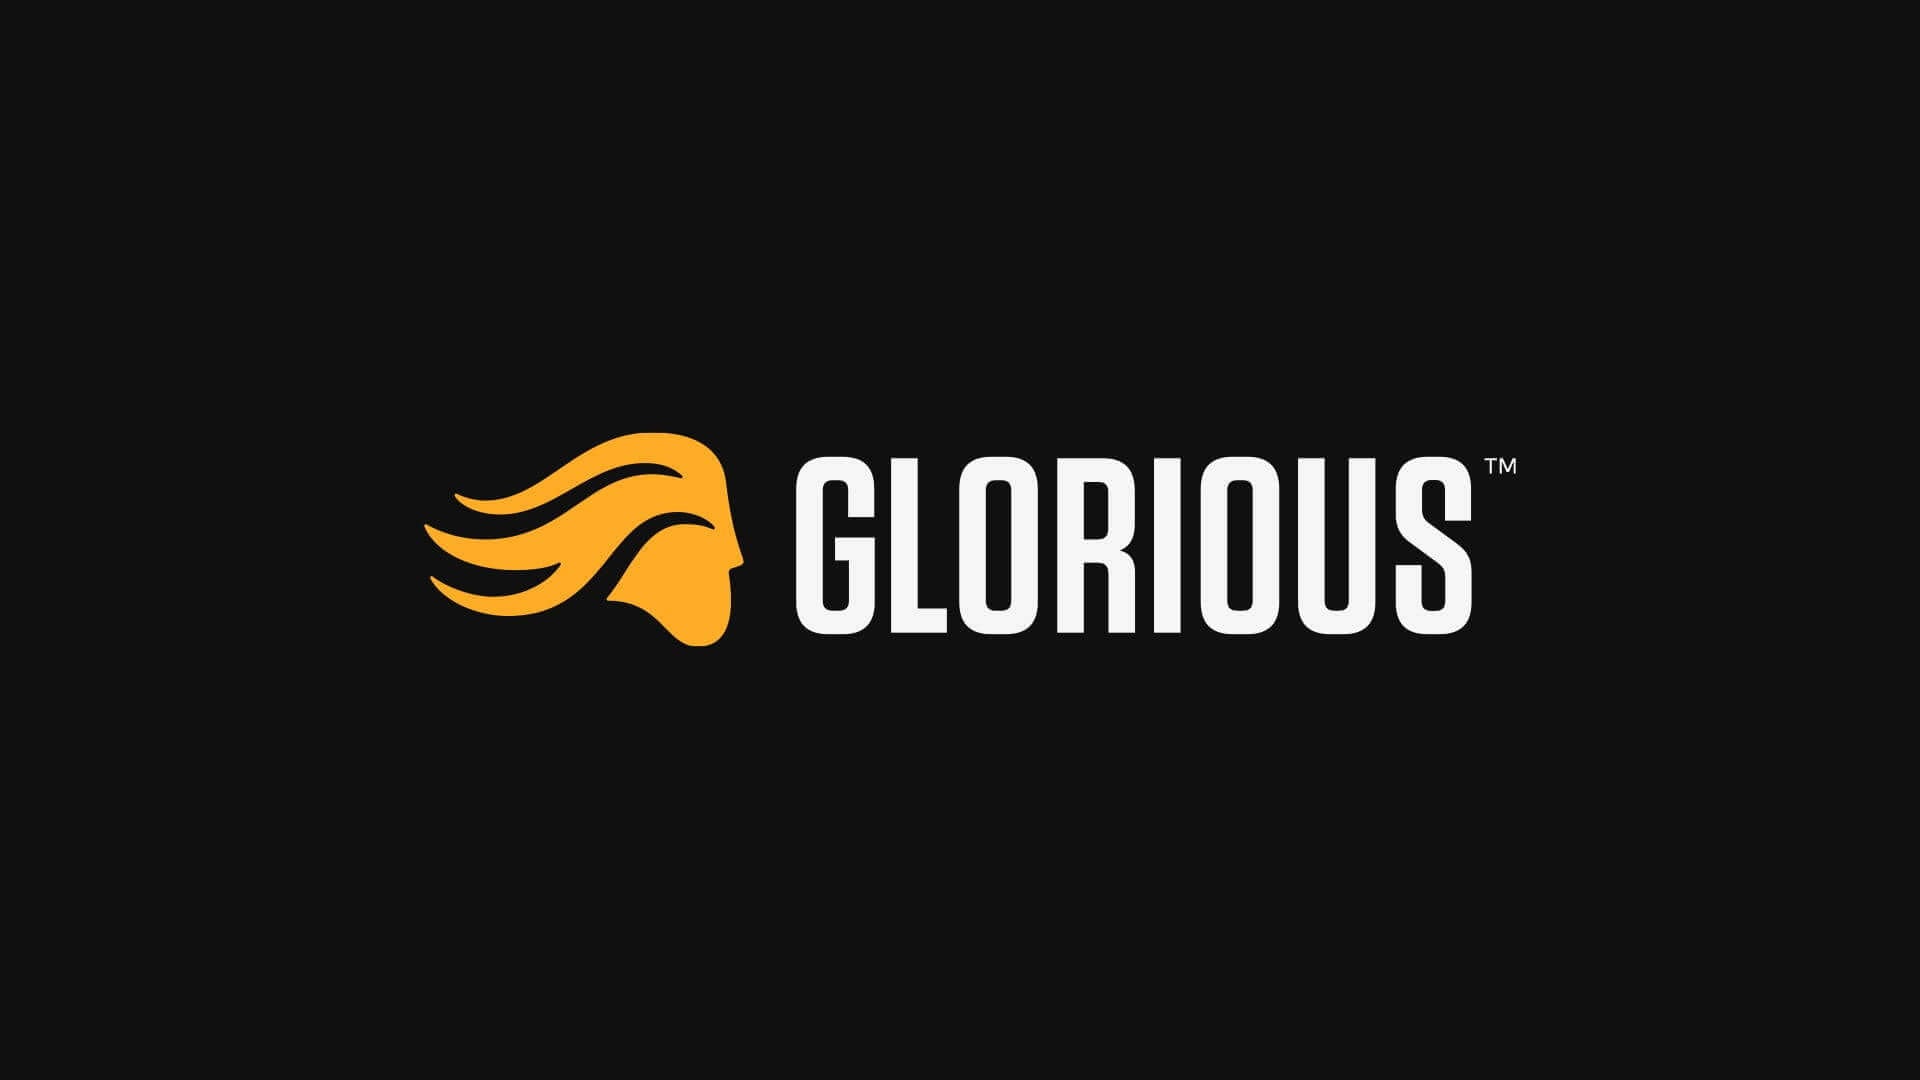 Today, We Glorious! - Glorious Gaming